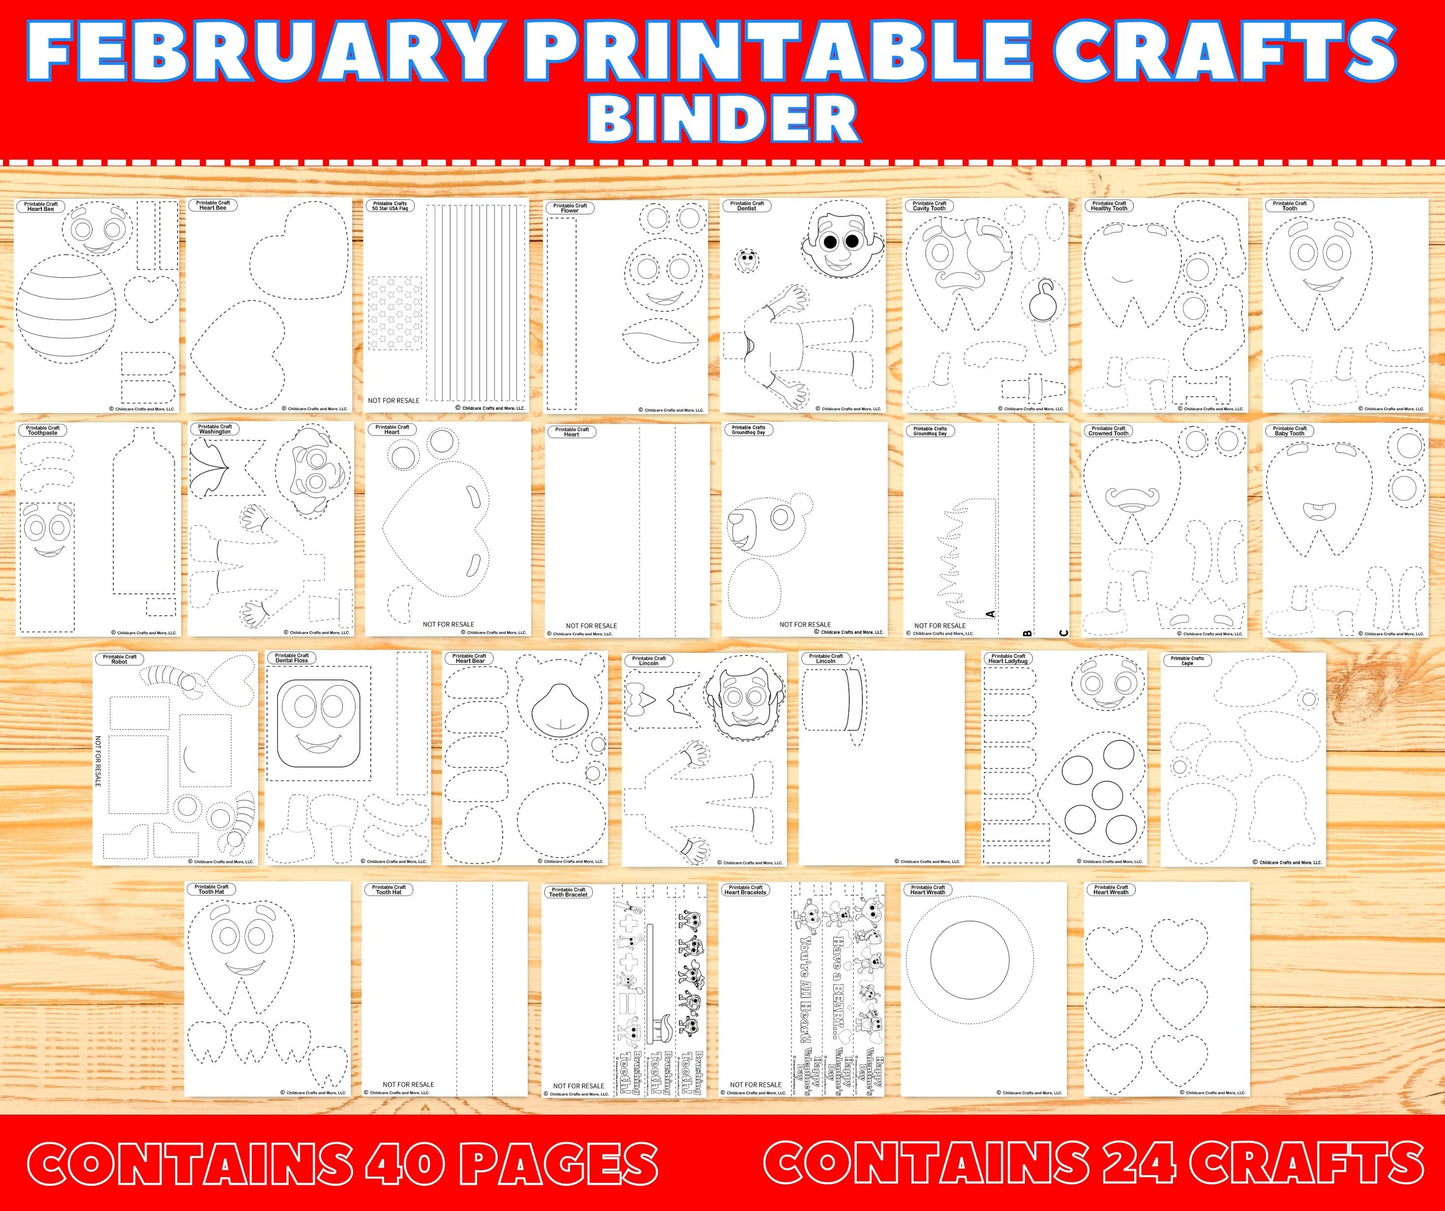 February Printable Crafts Binder - Download